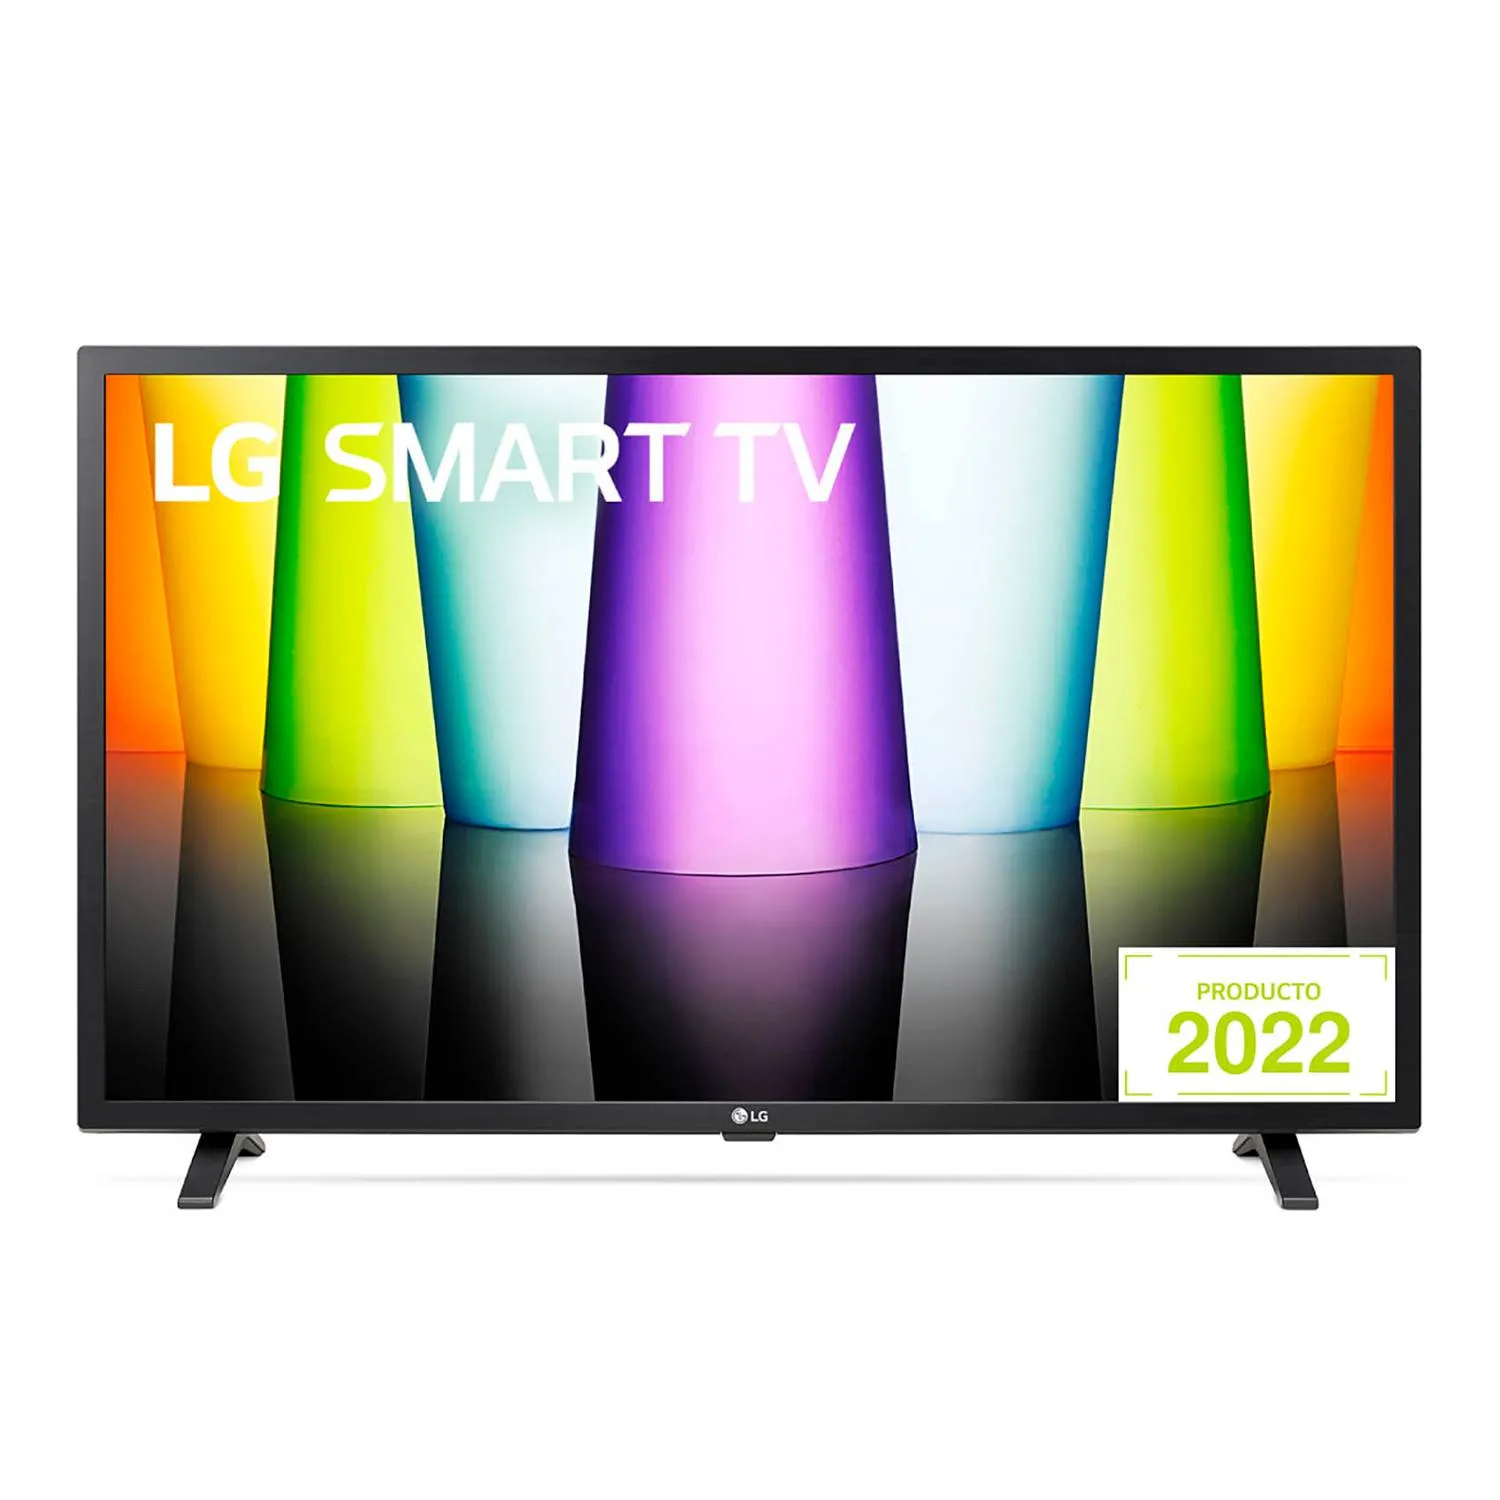 LG 32" Smart Tv + Antena TDT